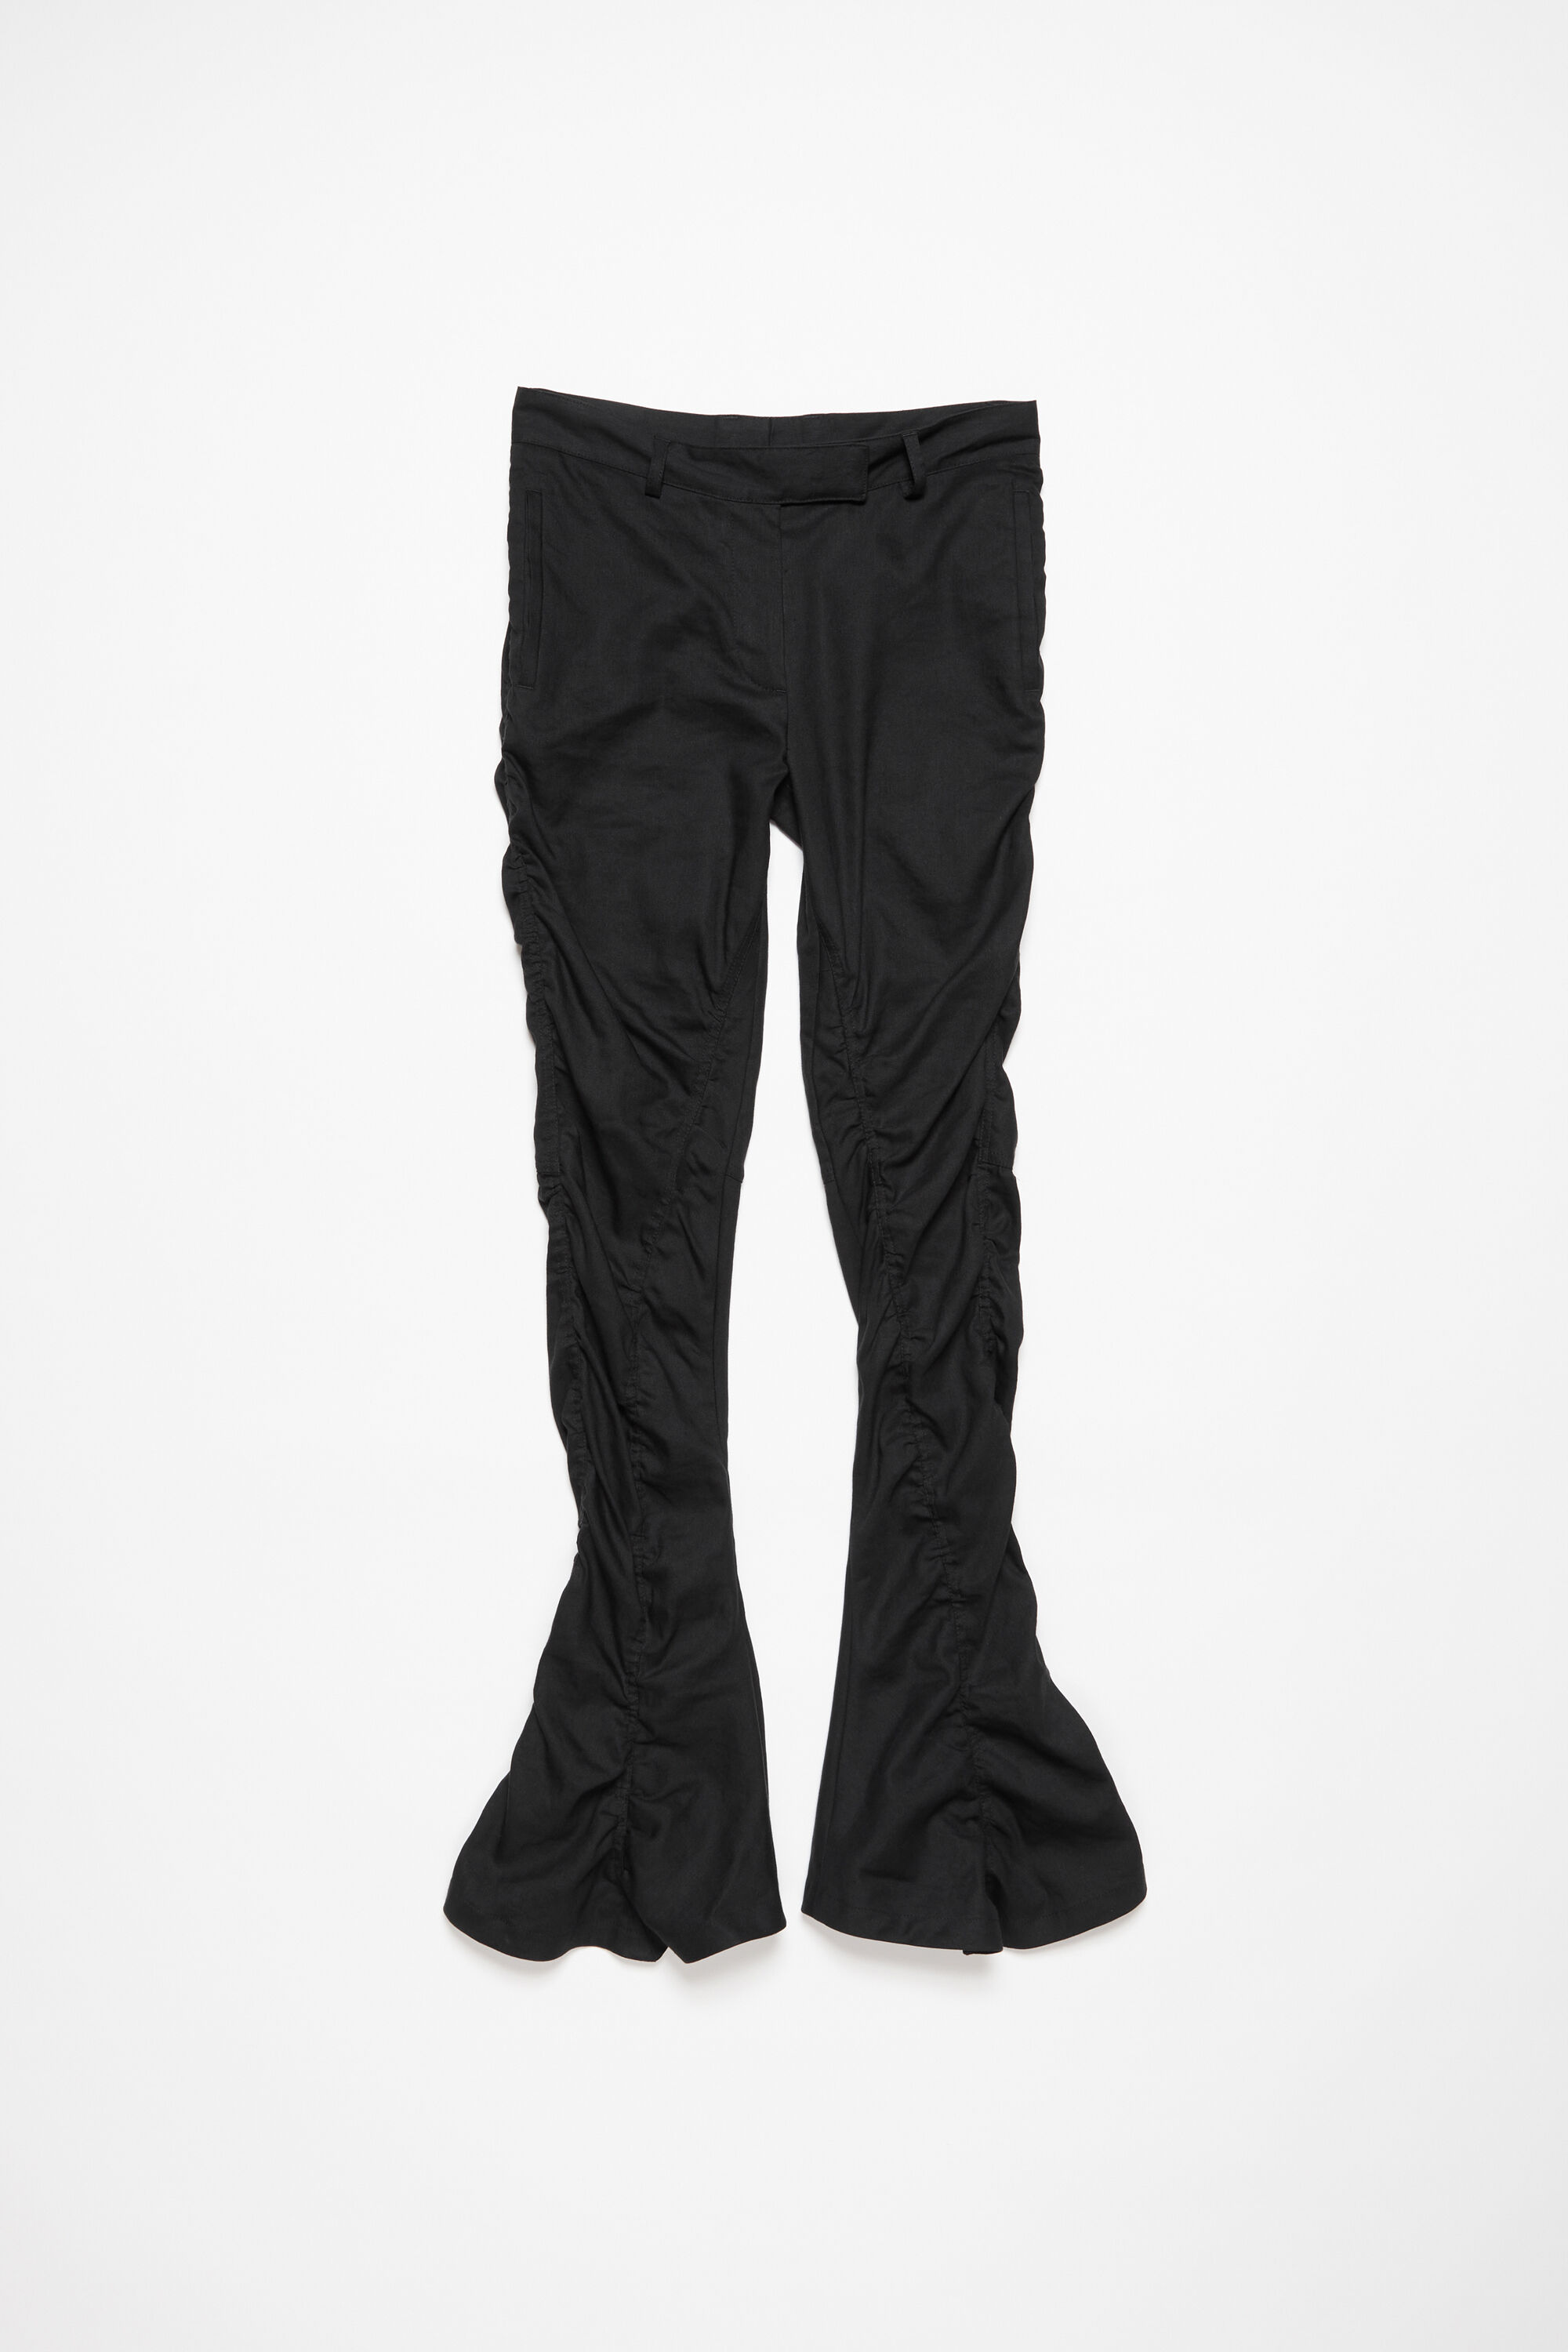 Acne Studios – Women's flared trousers